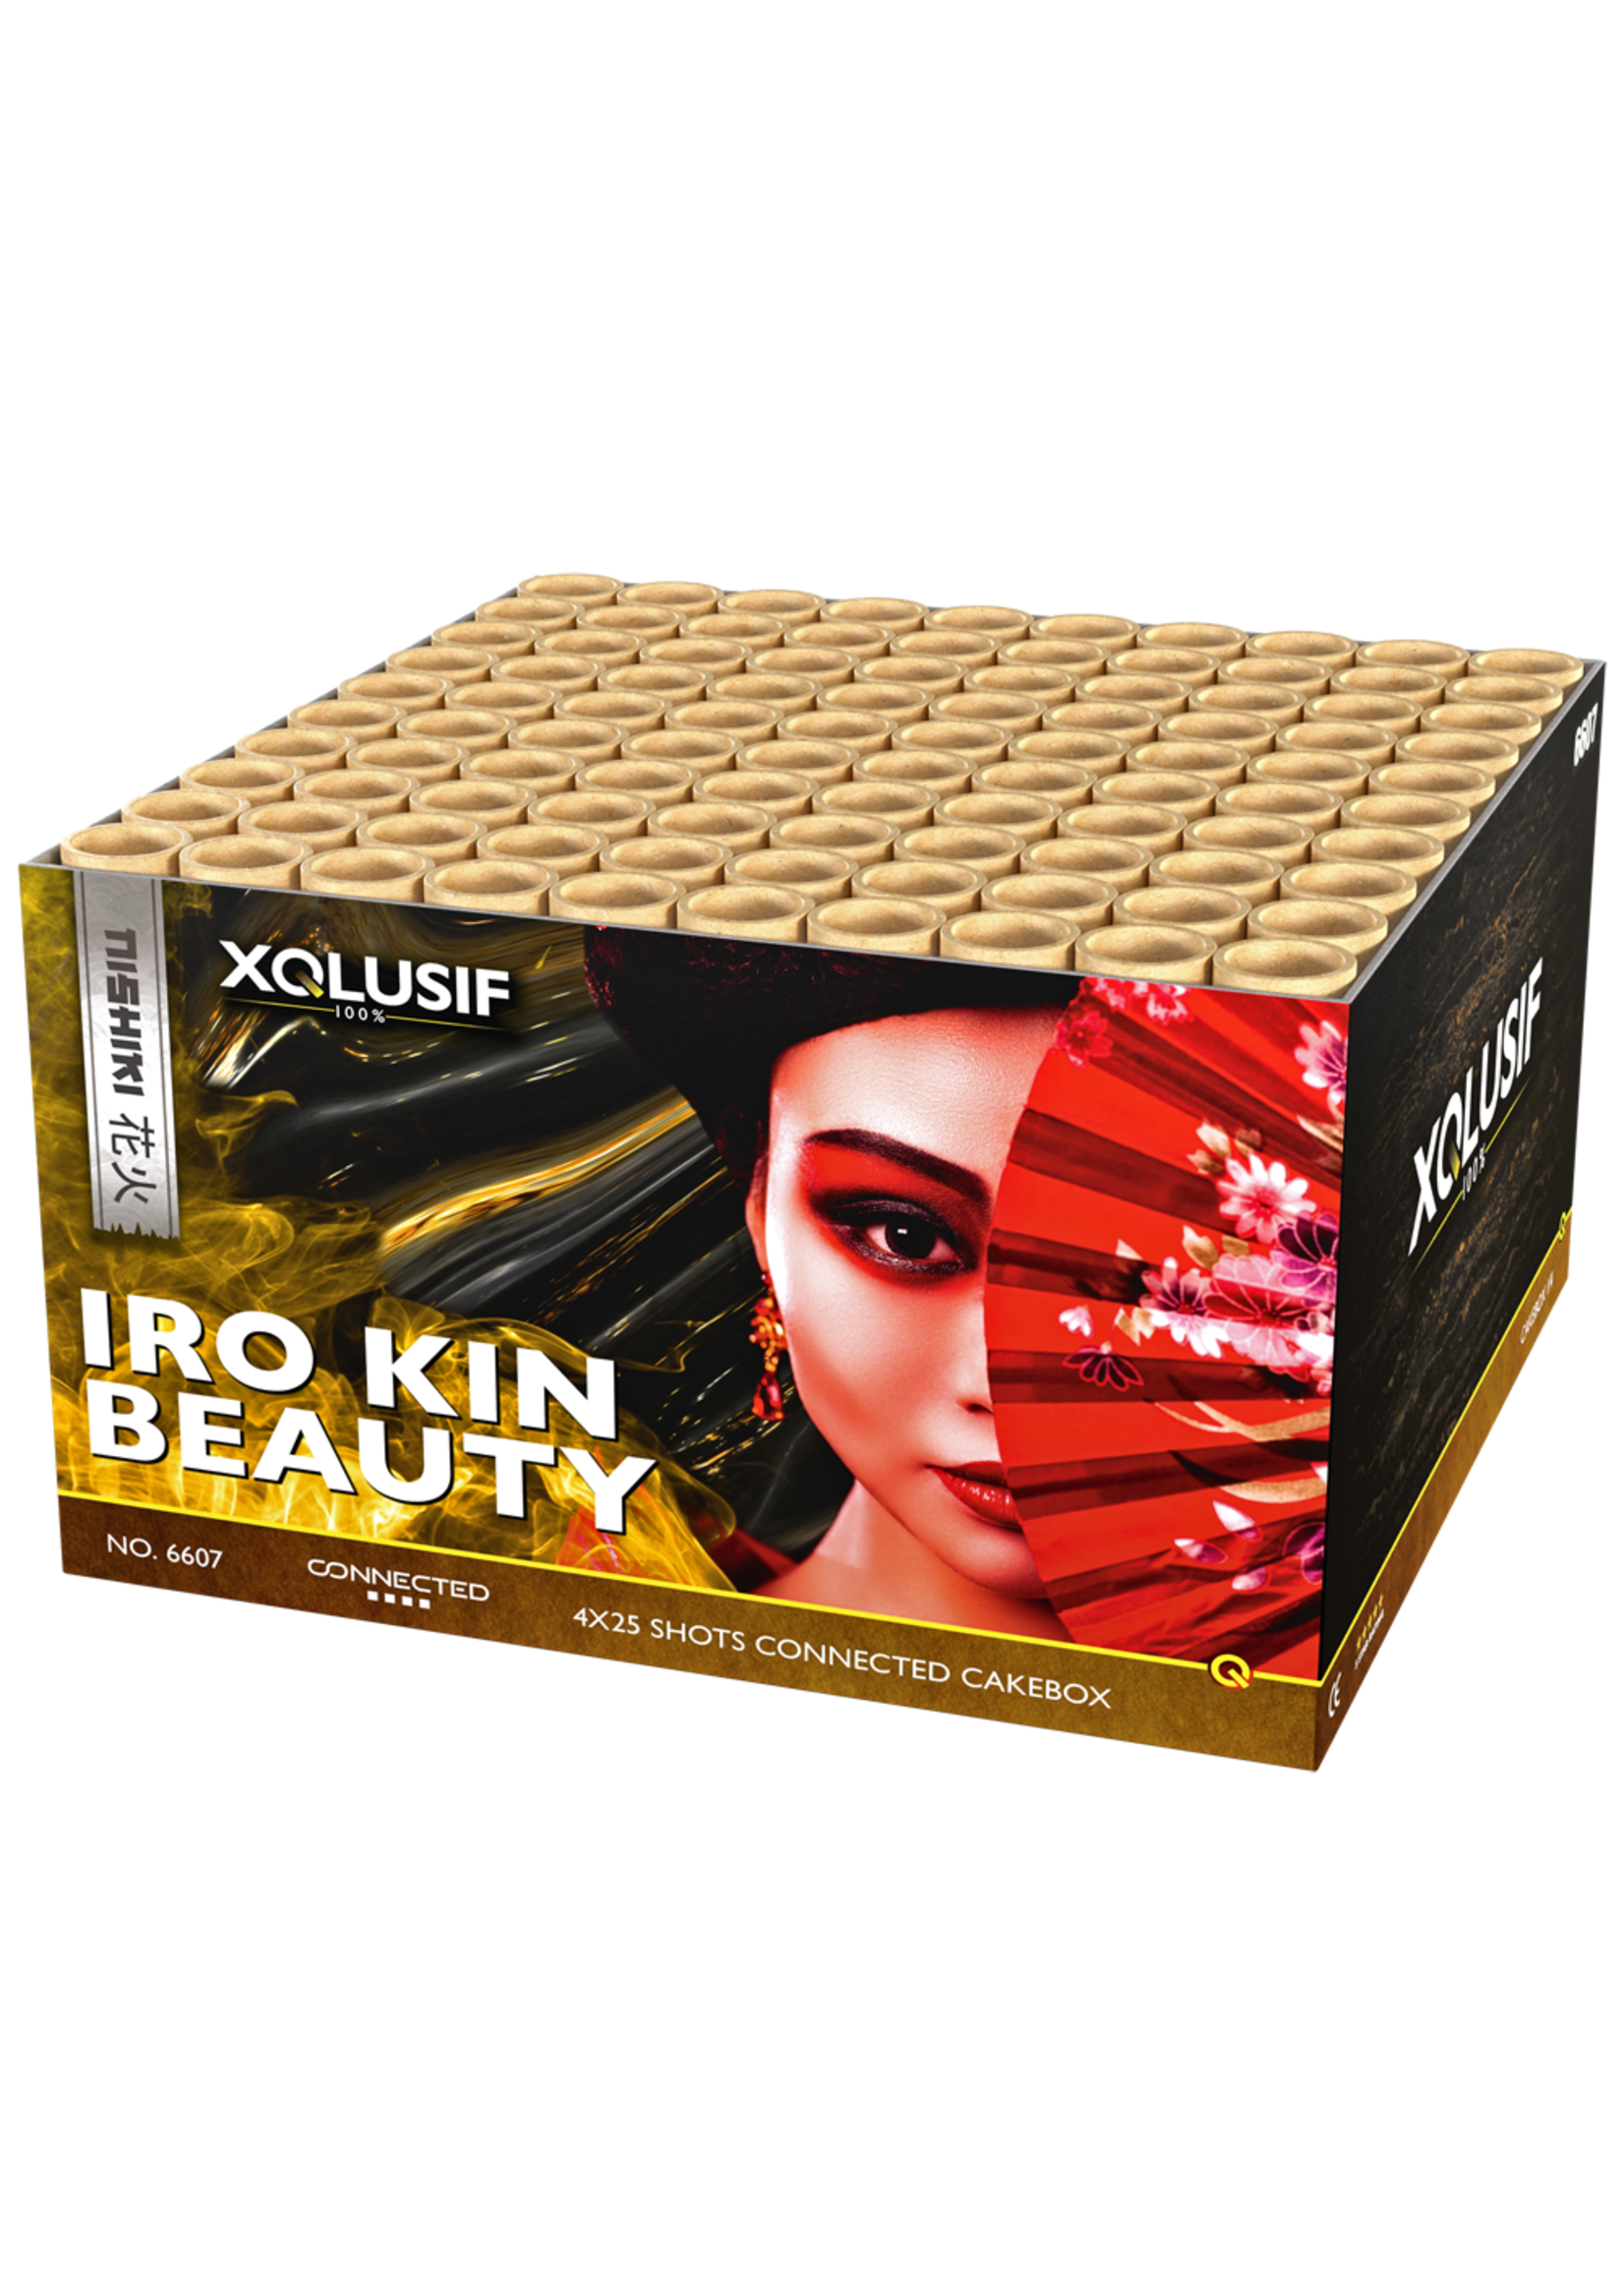 Volt! Iro Kin Beauty 100 shots